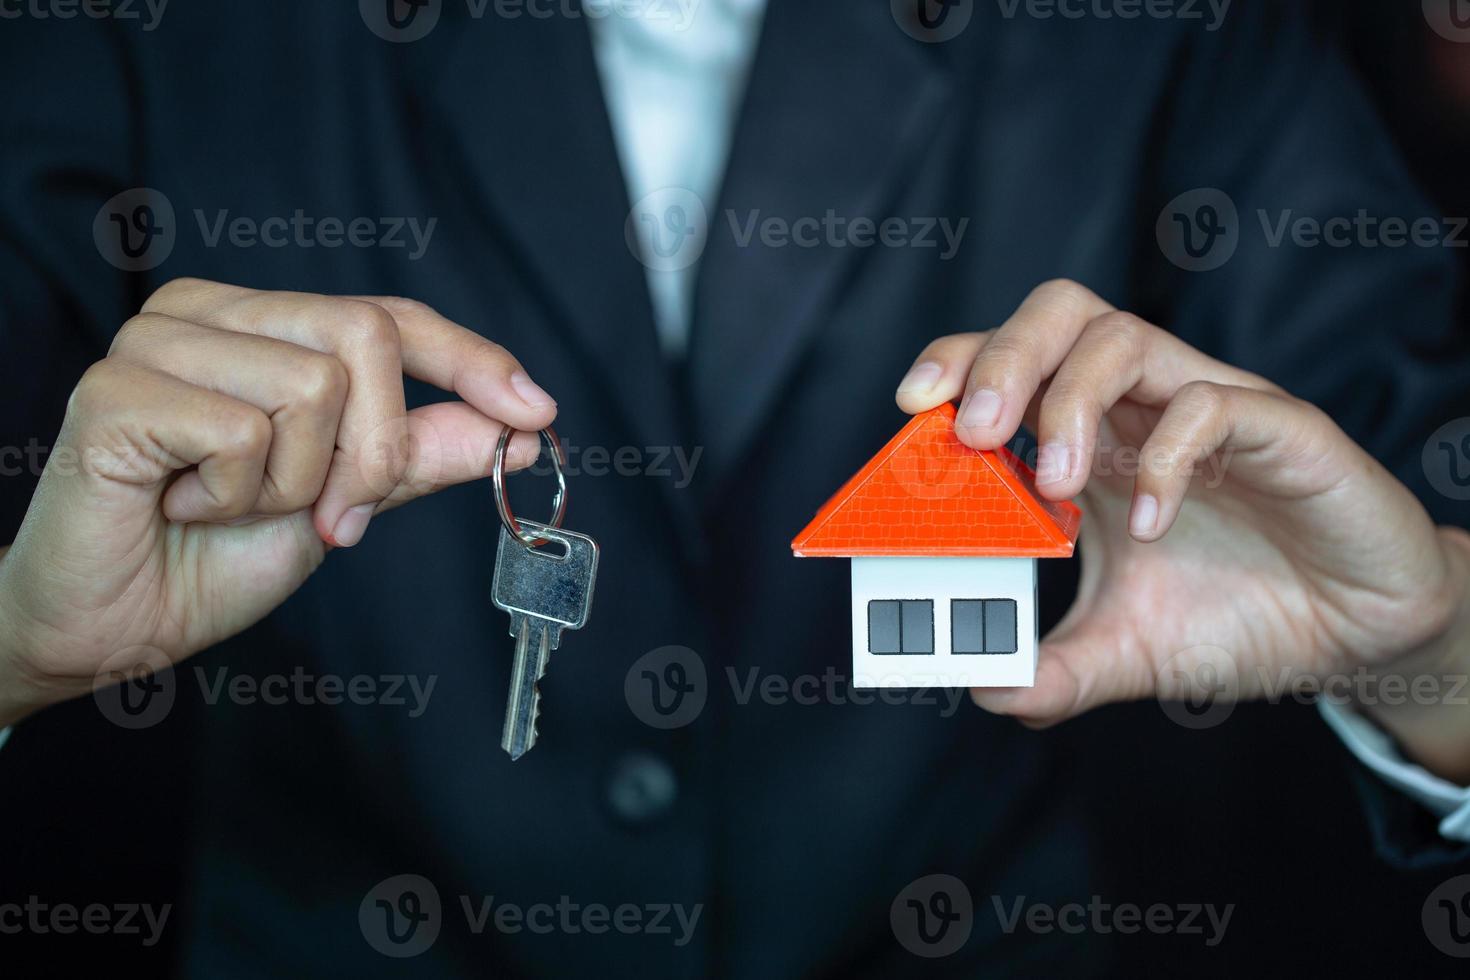 verklig egendom ombud med hus modell och nycklar, verklig egendom och fast egendom begrepp foto